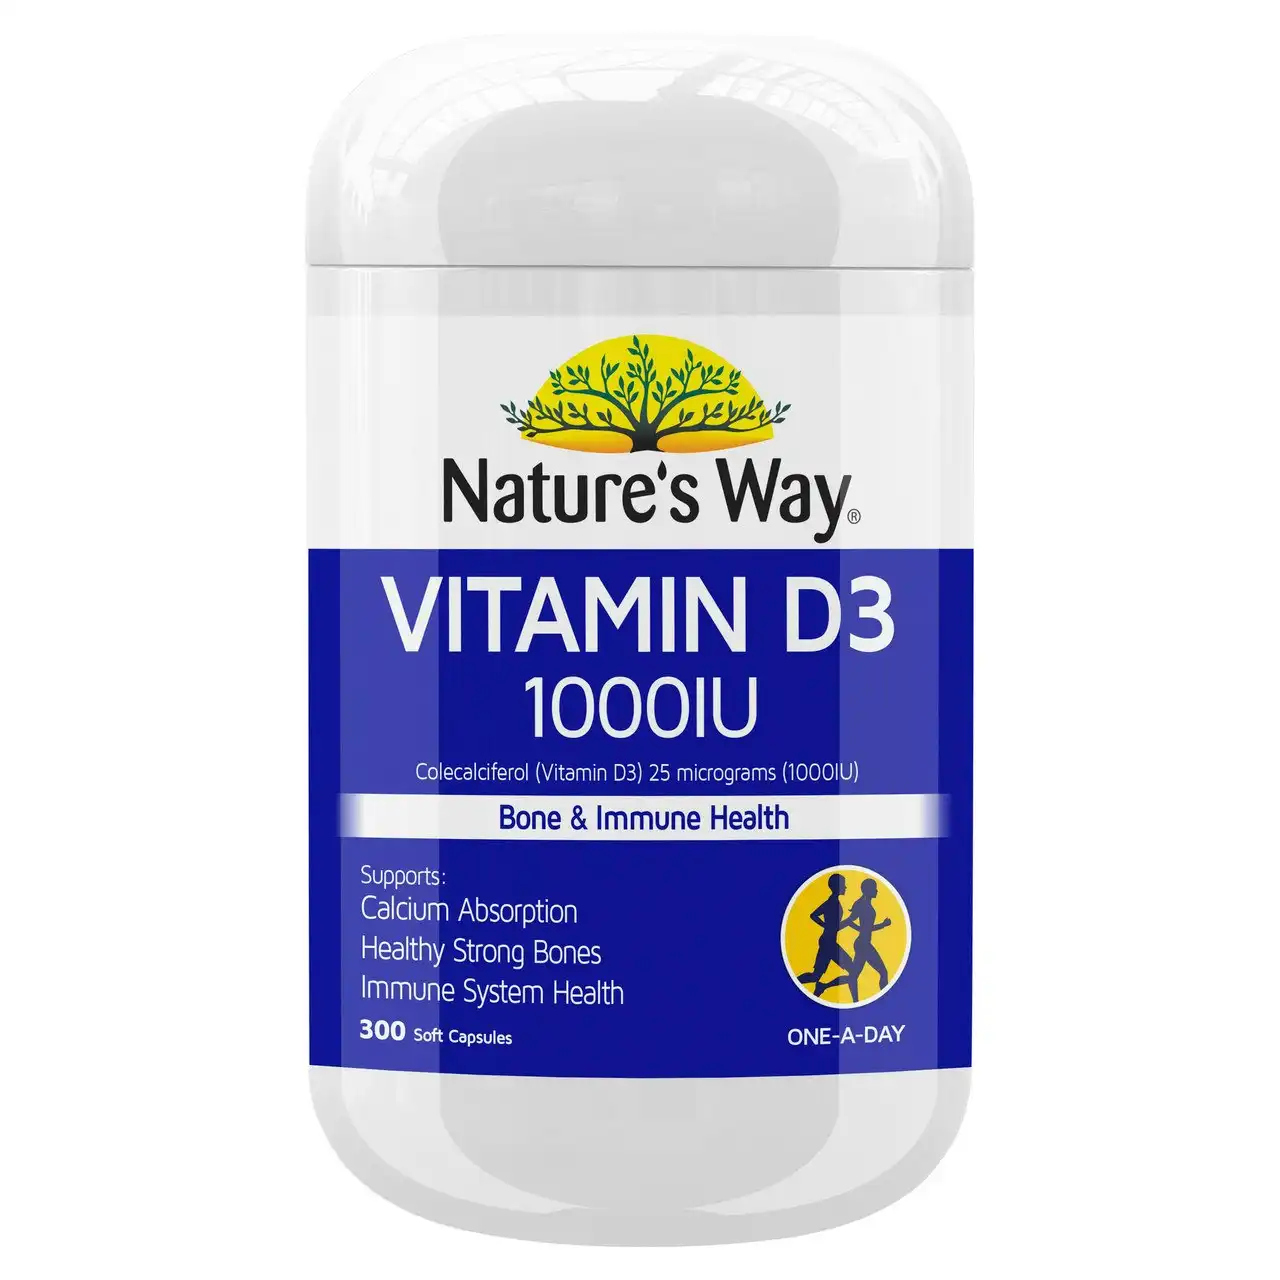 Nature's Way Vitamin D3 1000IU 300s